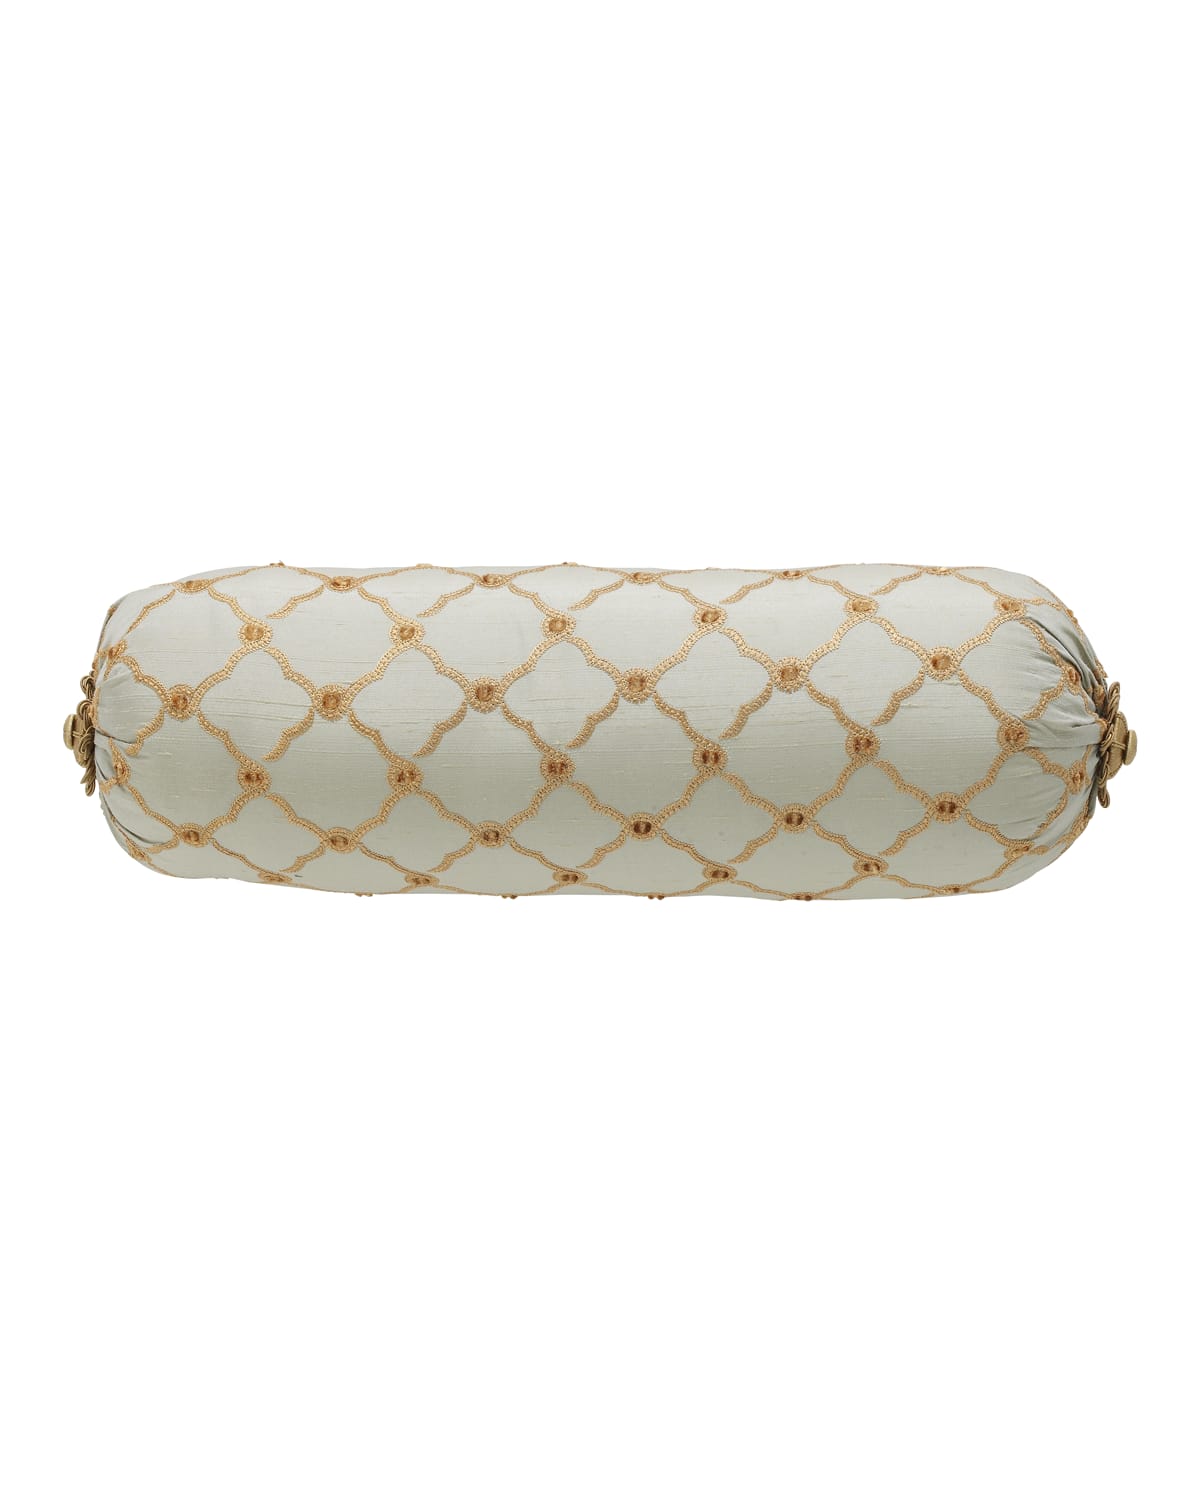 Image Dian Austin Couture Home Petit Trianon Trellis Neck Roll Pillow, 8" x 19"